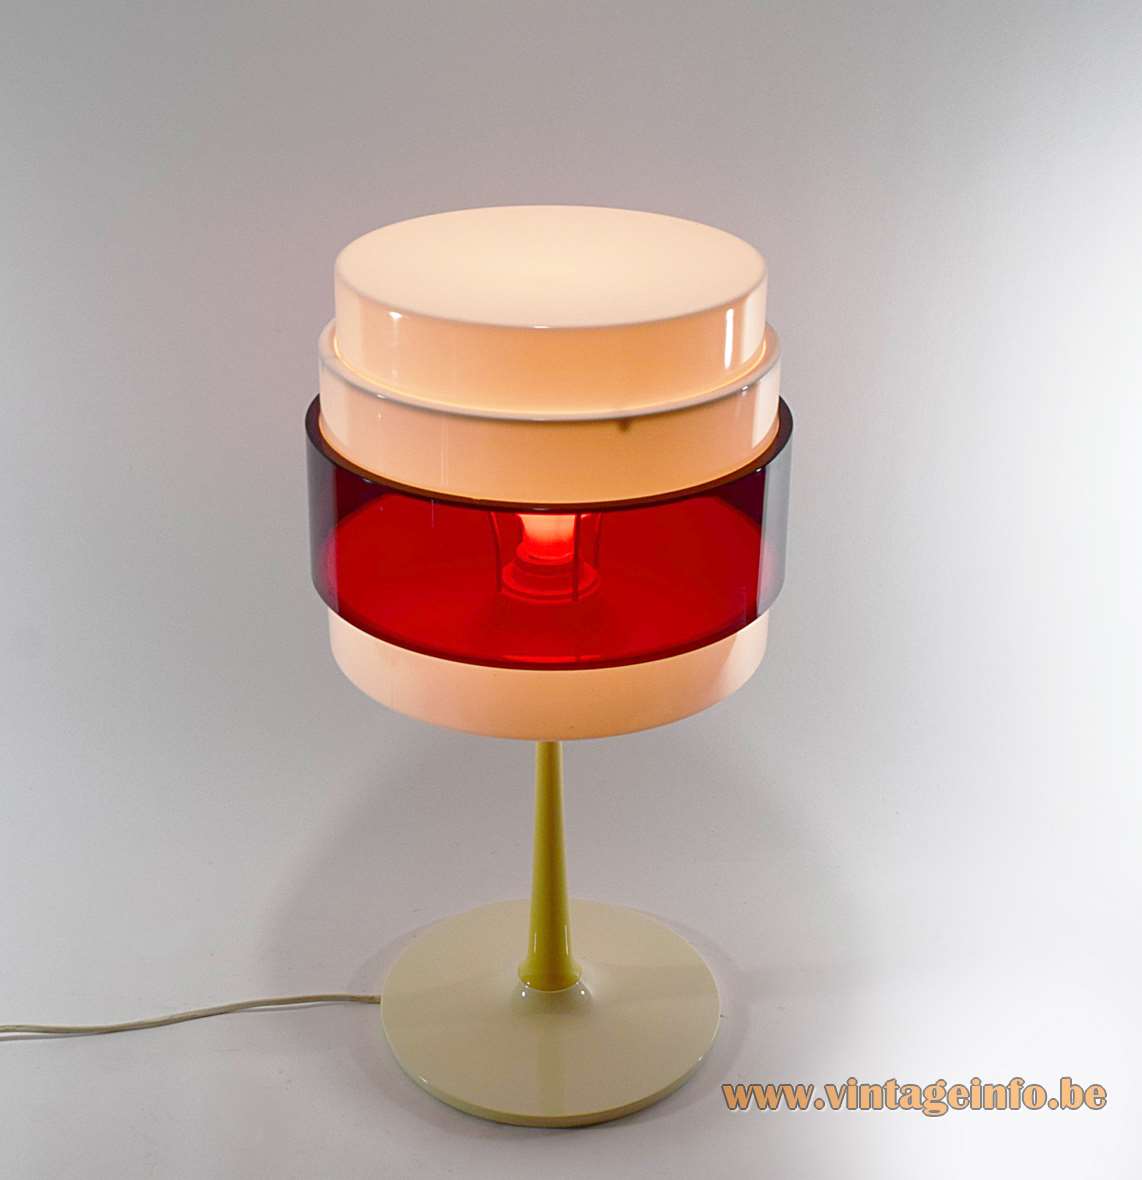 IKEA Energi table lamp white base conical rod red translucent plastic lampshade 2002 design: Öjerstam Elebäck